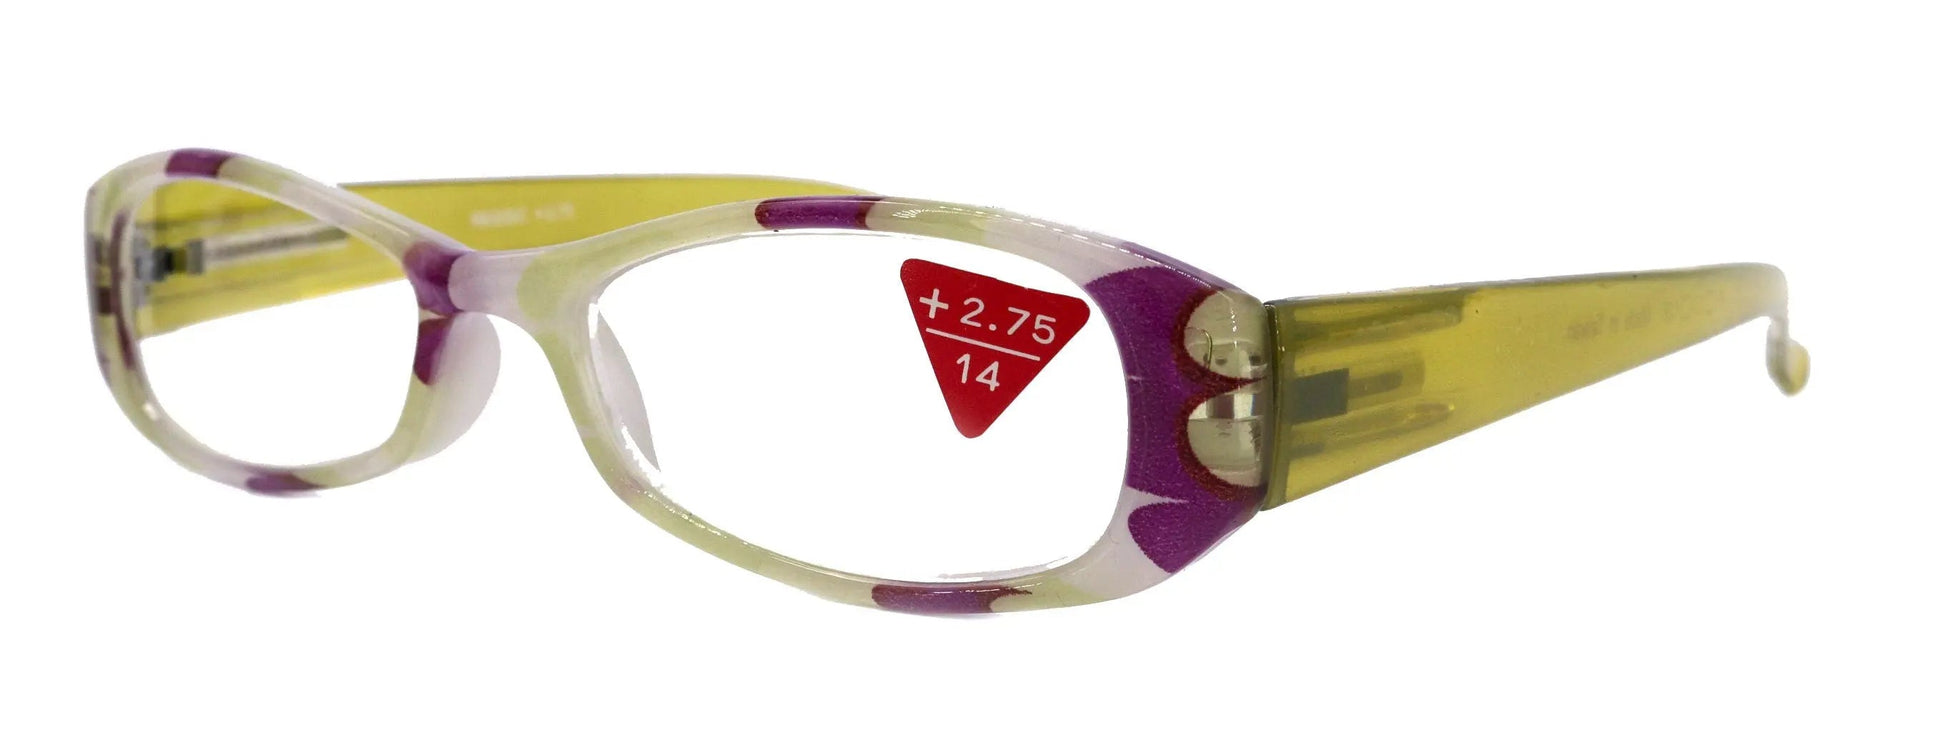 Dashing Stripes, (Premium) Reading Glasses High End Reader +1.25..+3 Magnifying, Rectangular (Green, Purple) Optical Frame. NY Fifth Avenue